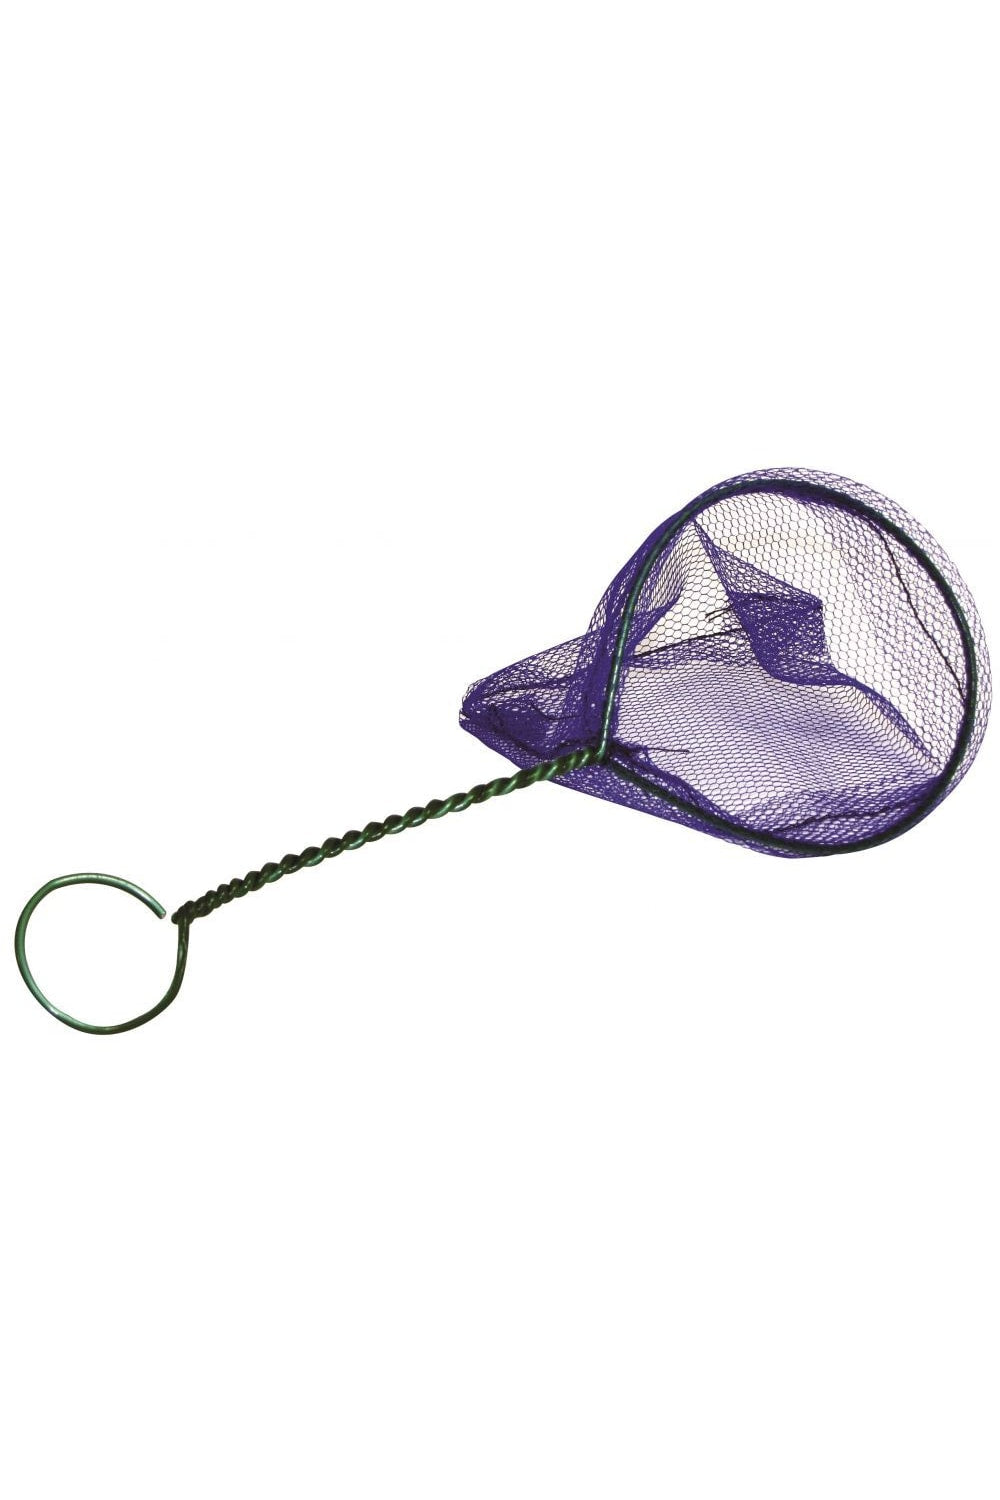 Supa Bowl Net (Purple/Green) (One Size)